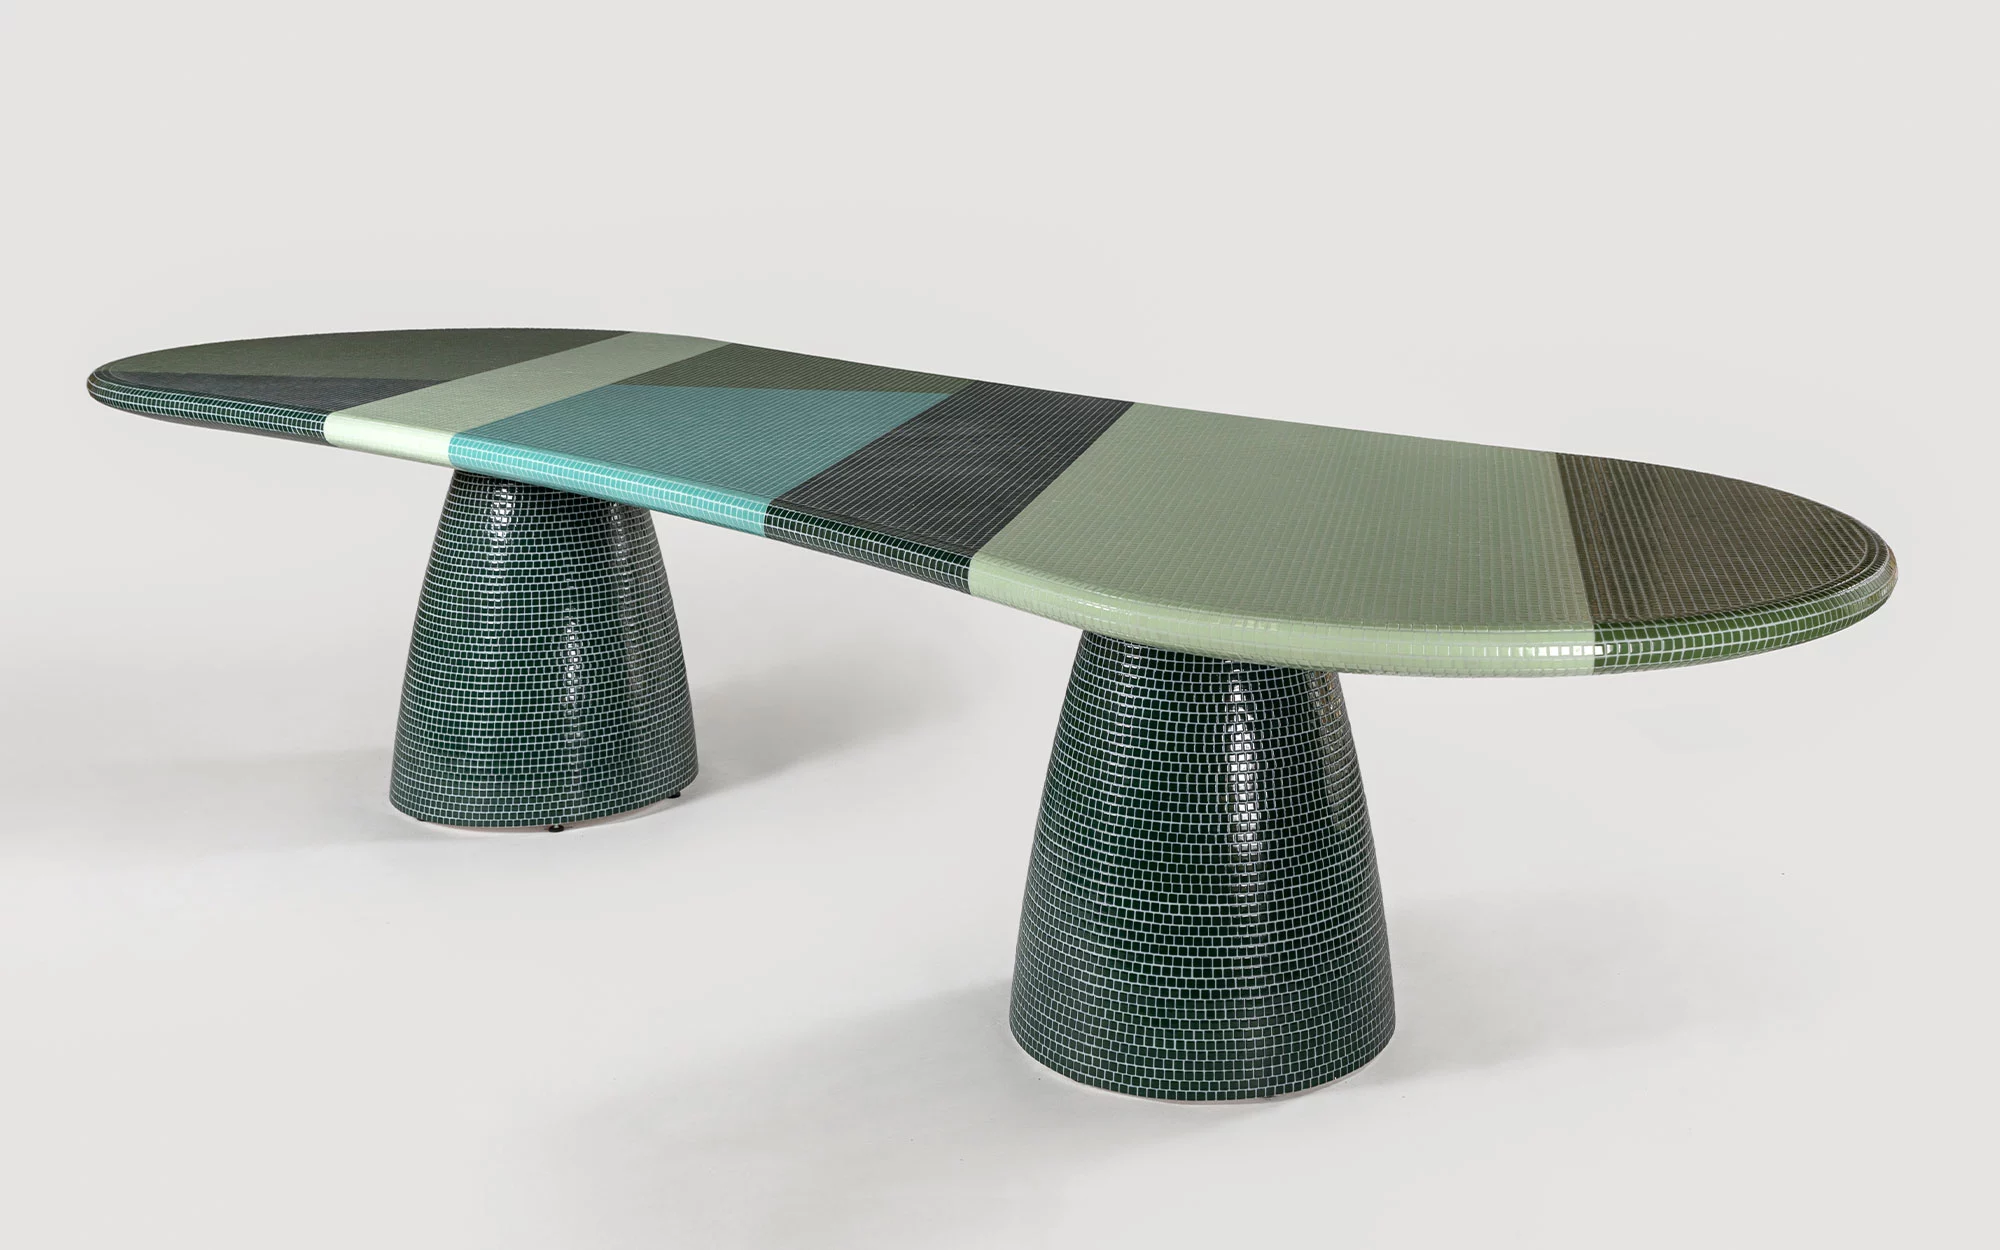 Umbria Dining Table - Alessandro Mendini - Console - Galerie kreo